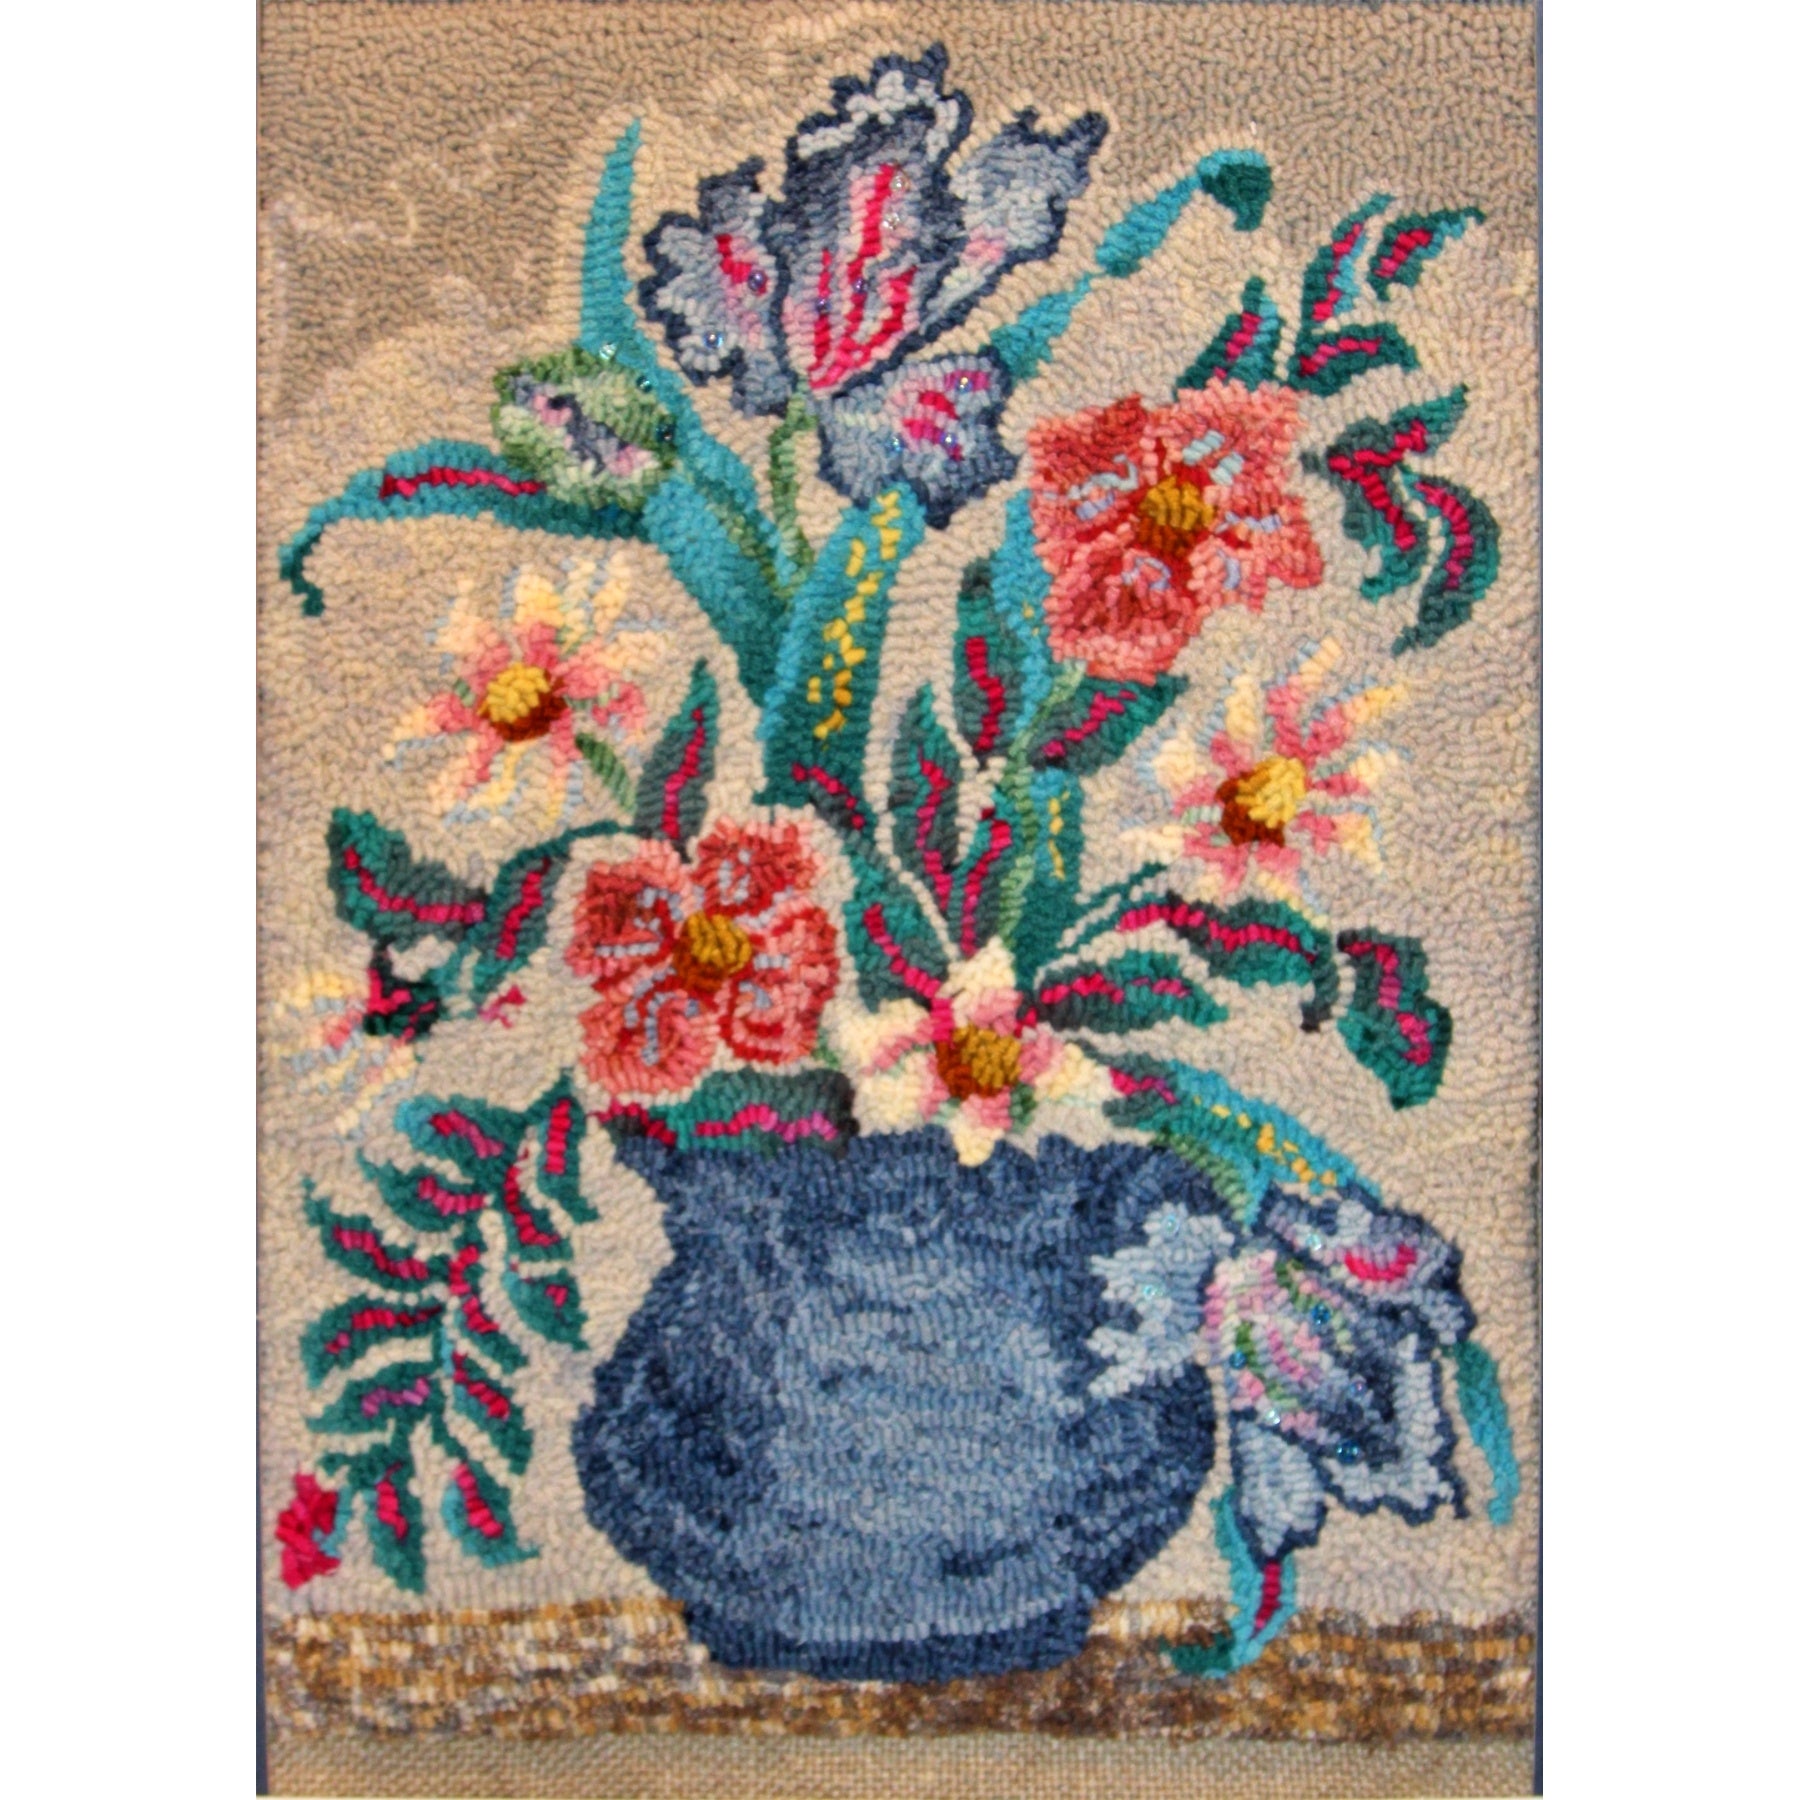 June Boquet, rug hooked by Elyse Olson